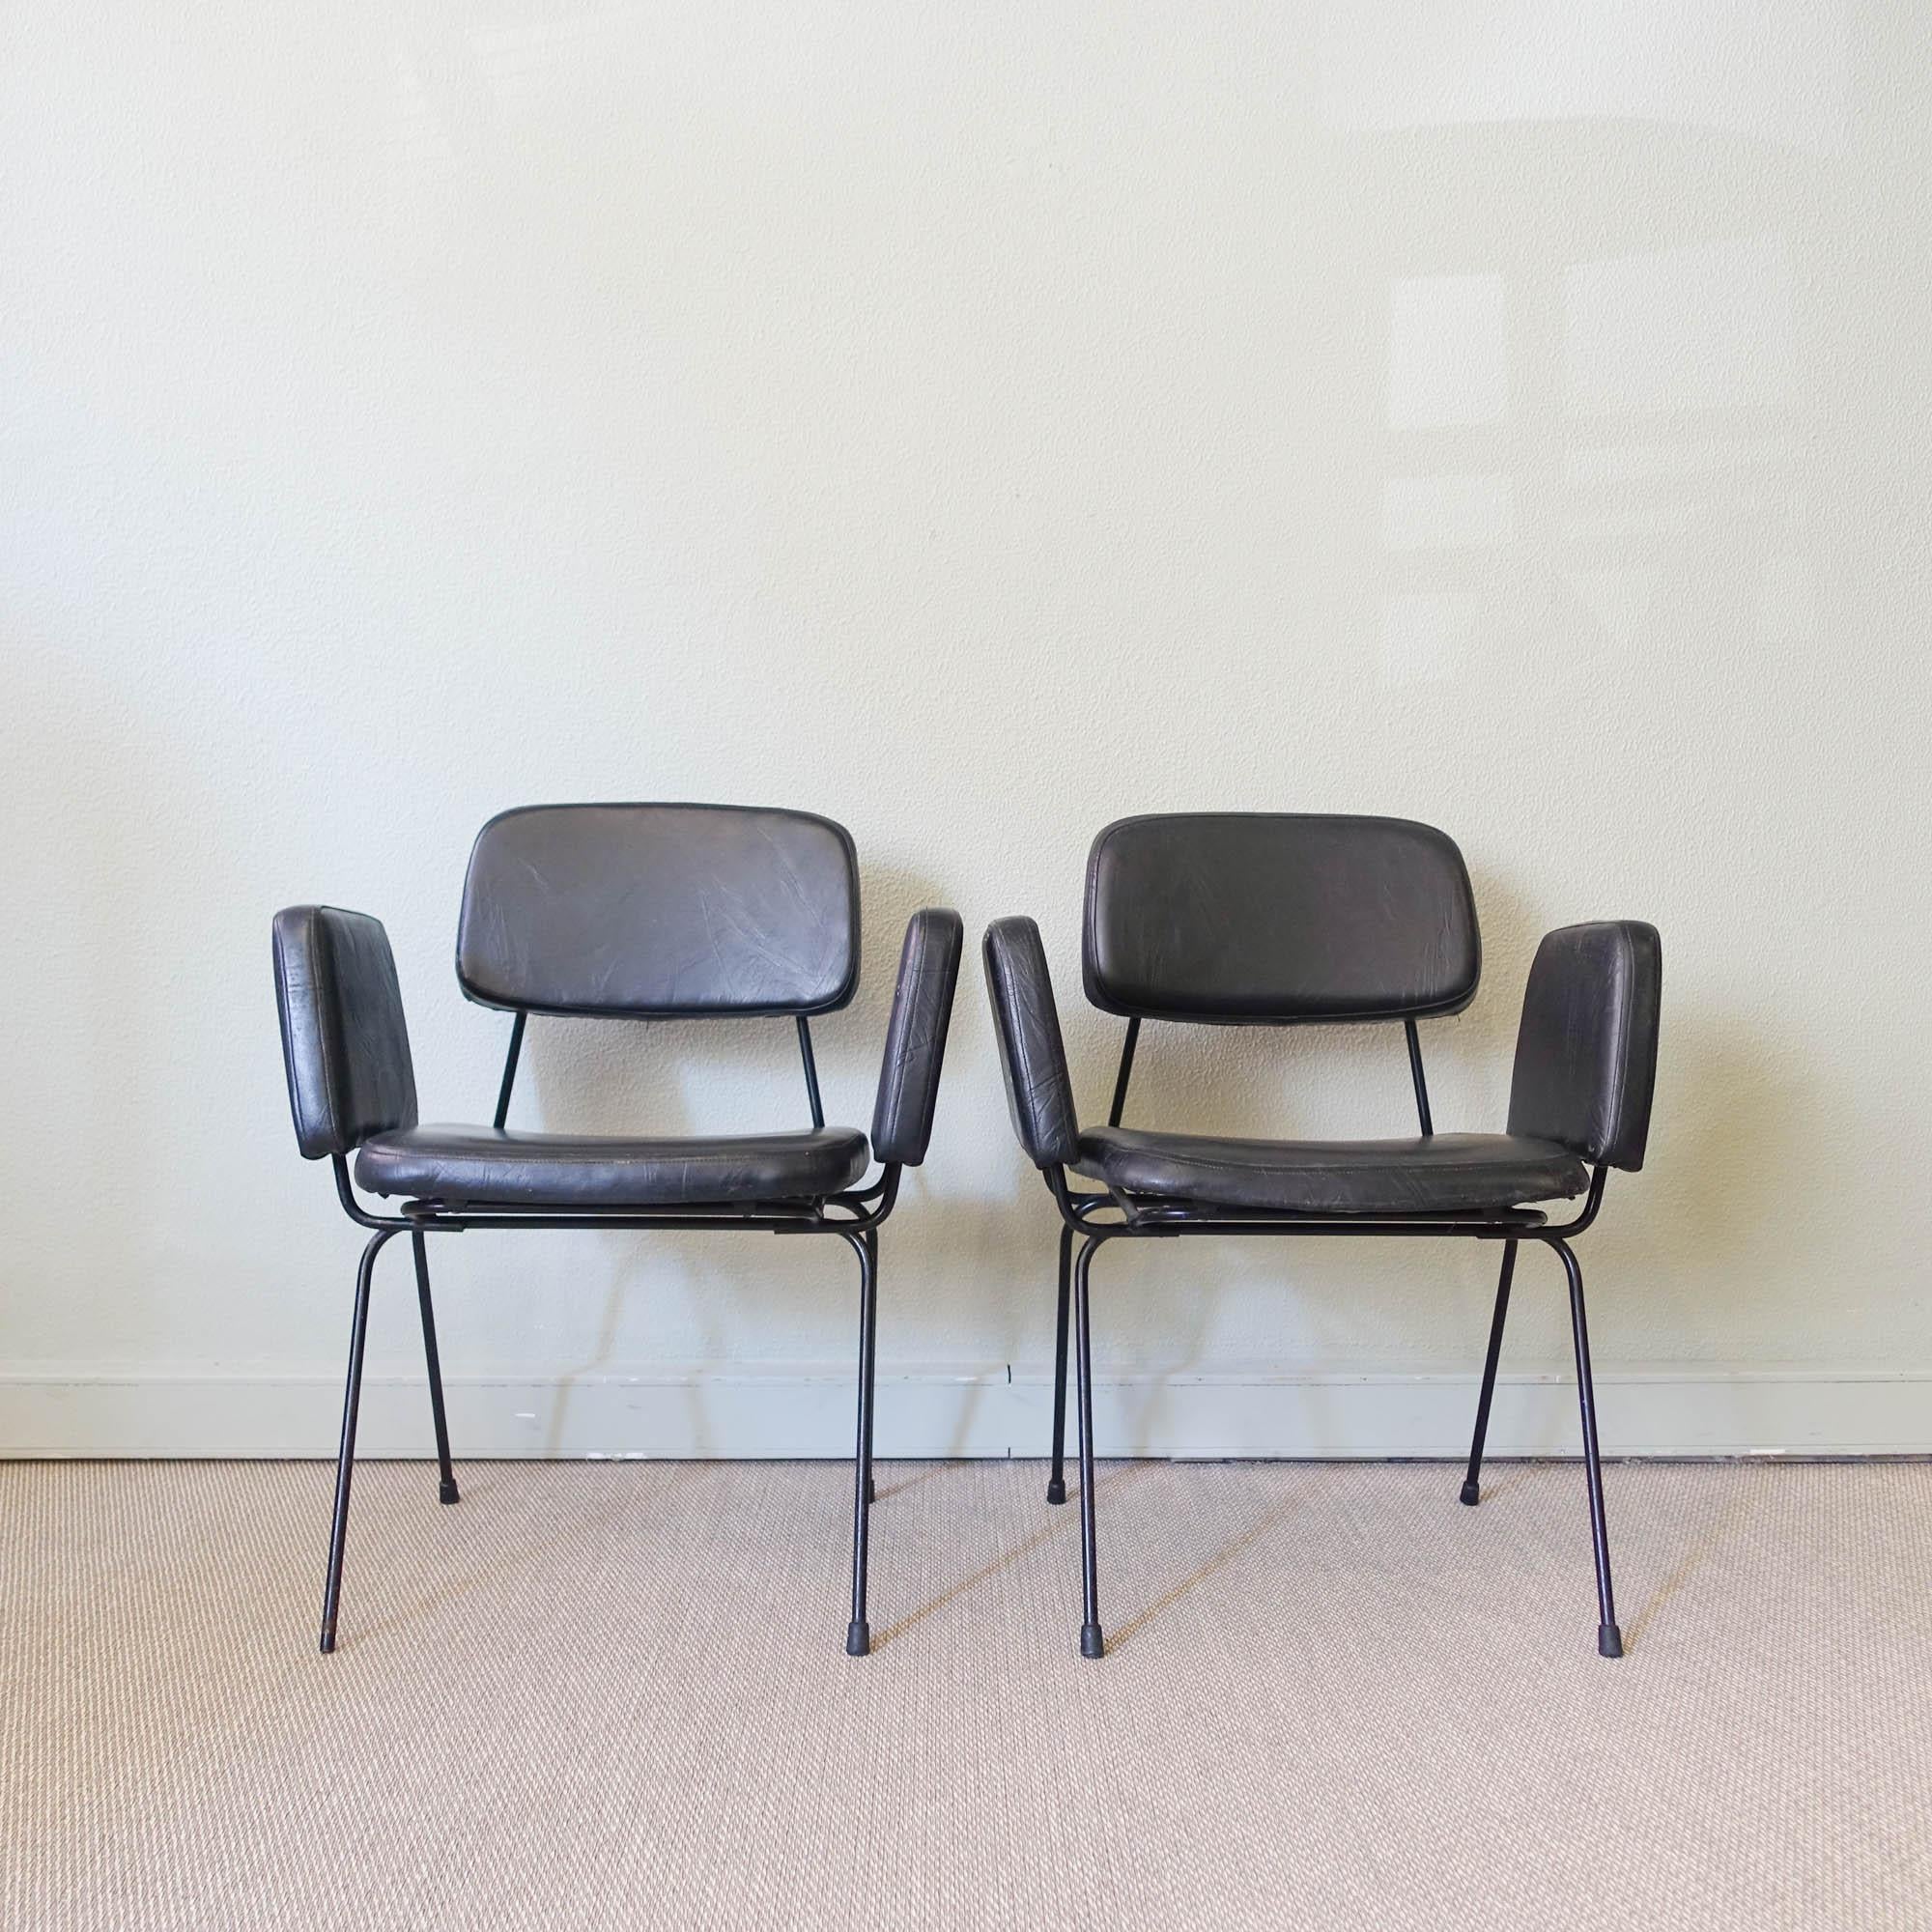 Cette paire de fauteuils, Prestigio Line, a été conçue par Daciano da Costa pour Metalúrgica da Longra, au Portugal, en 1962. 